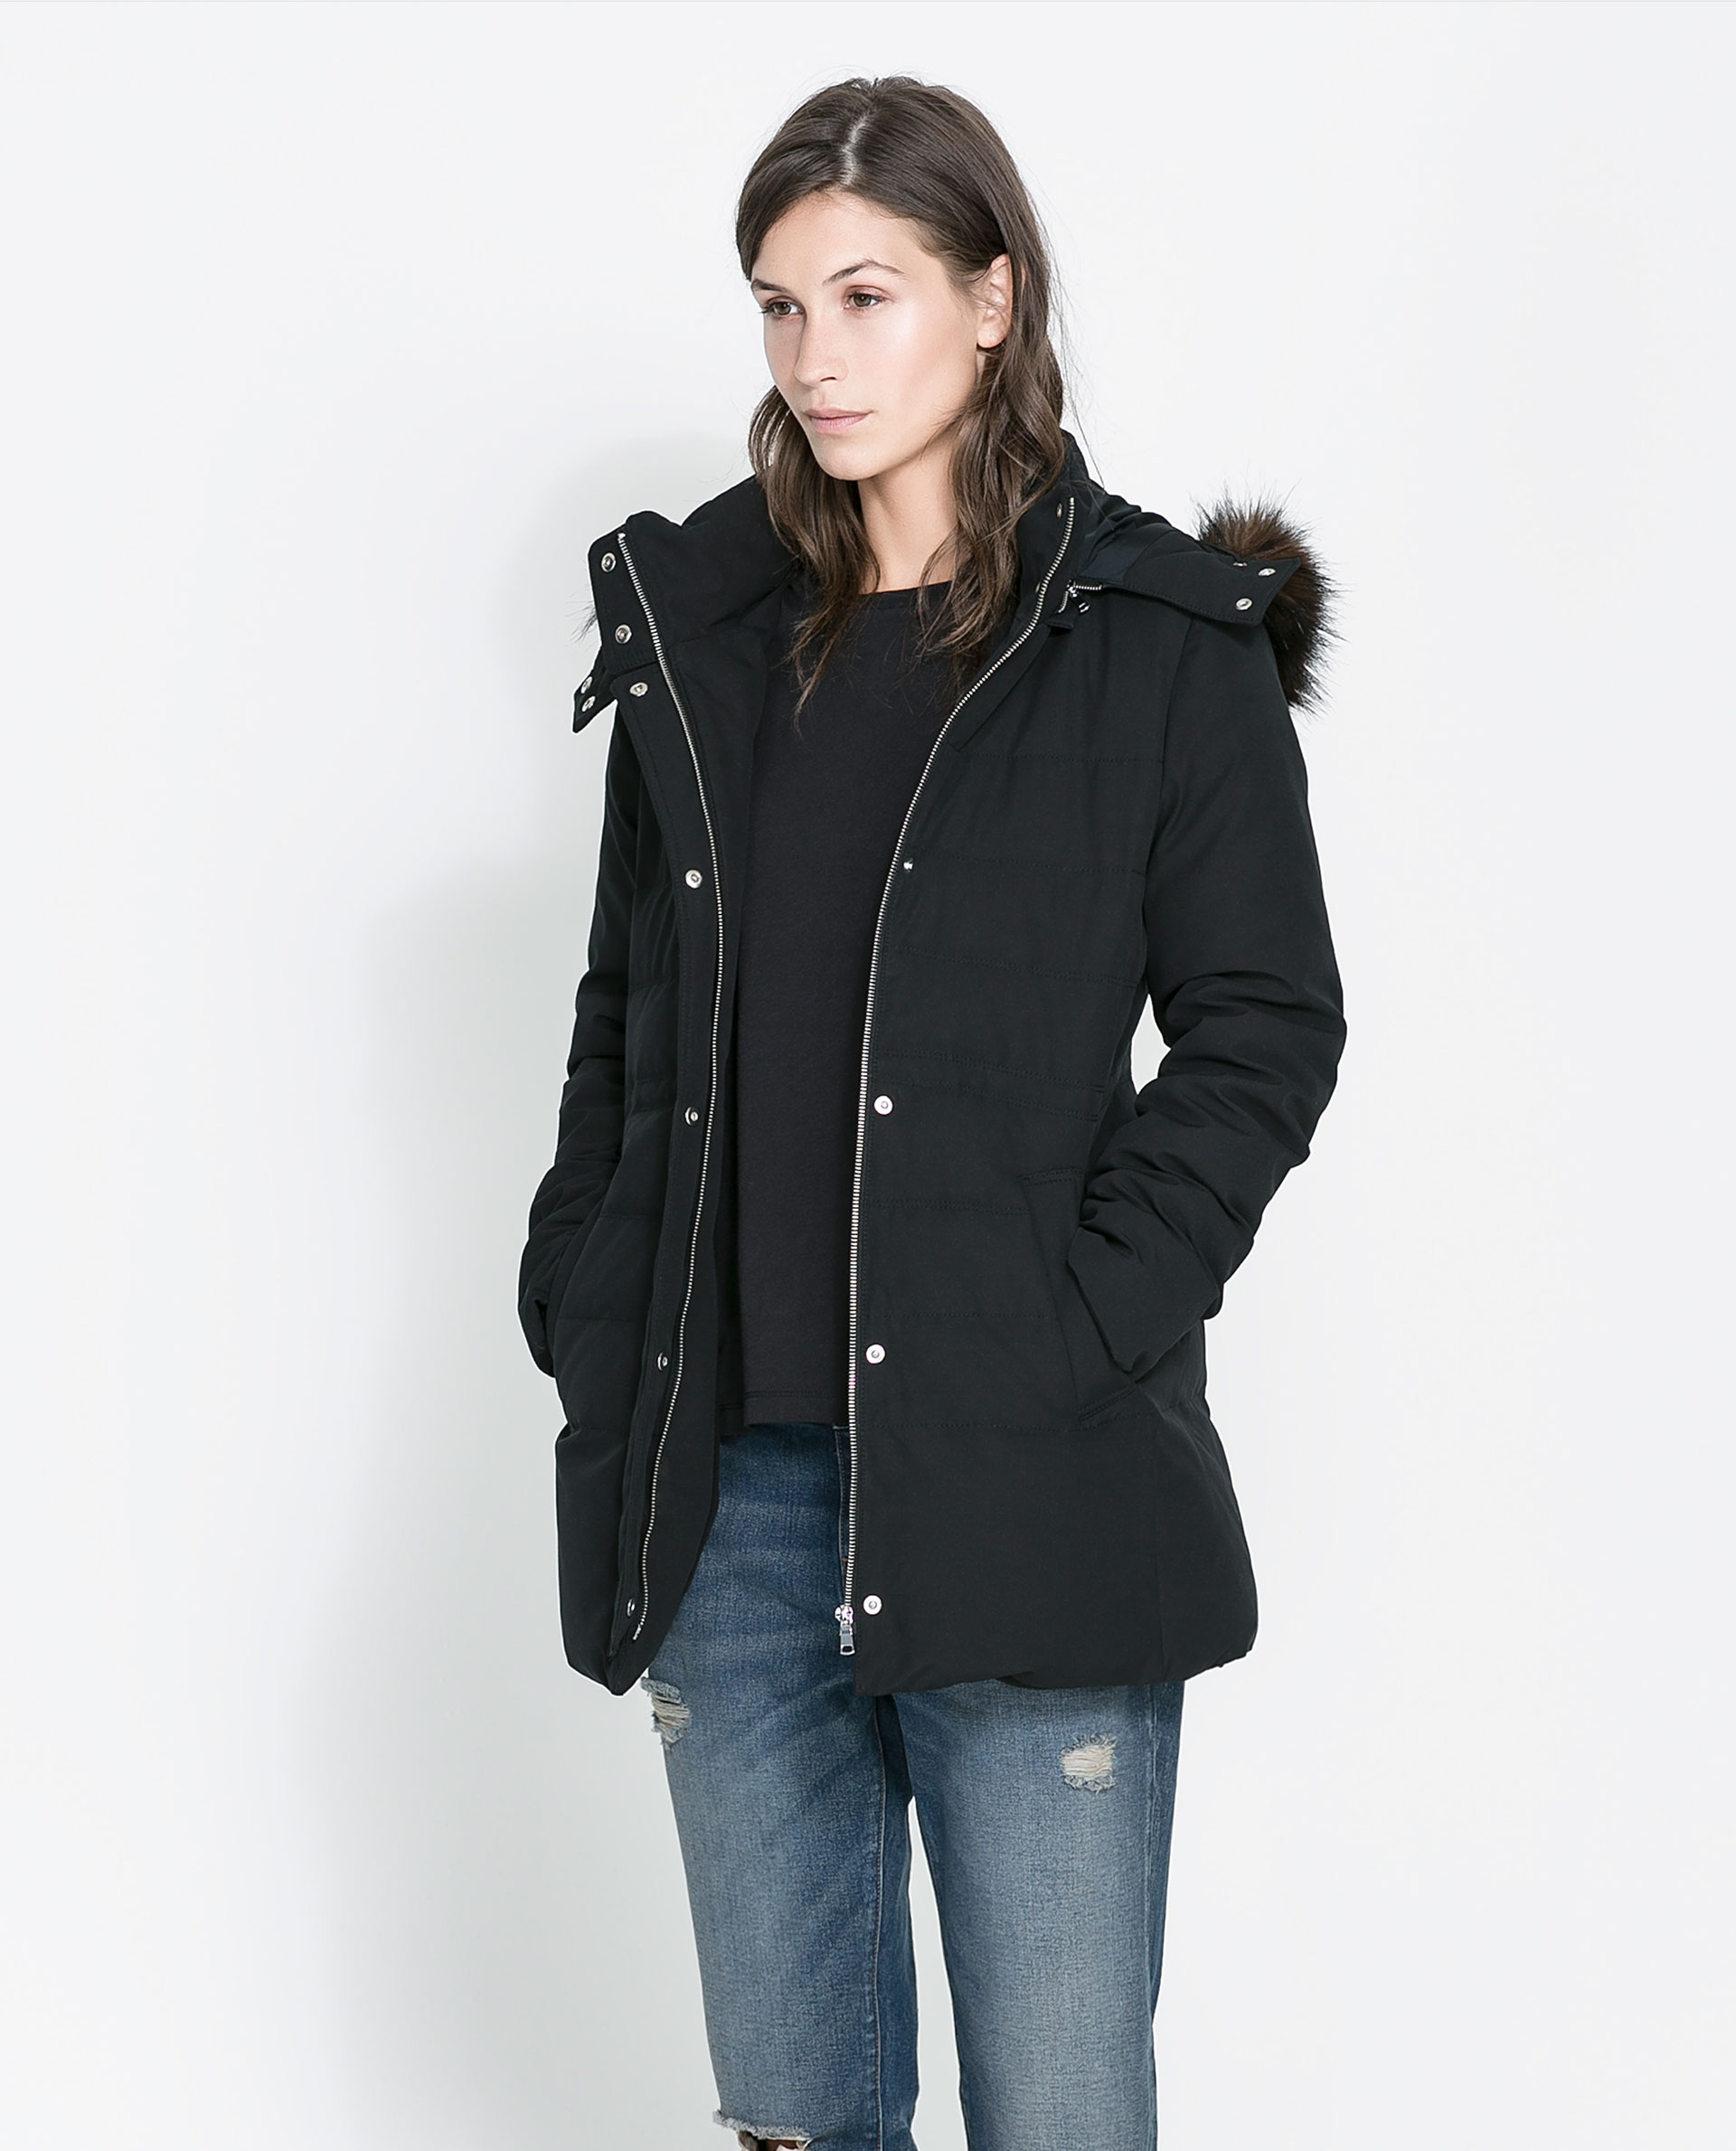 Zara Midlength Puffer Jacket with Fur Hood in Black | Lyst